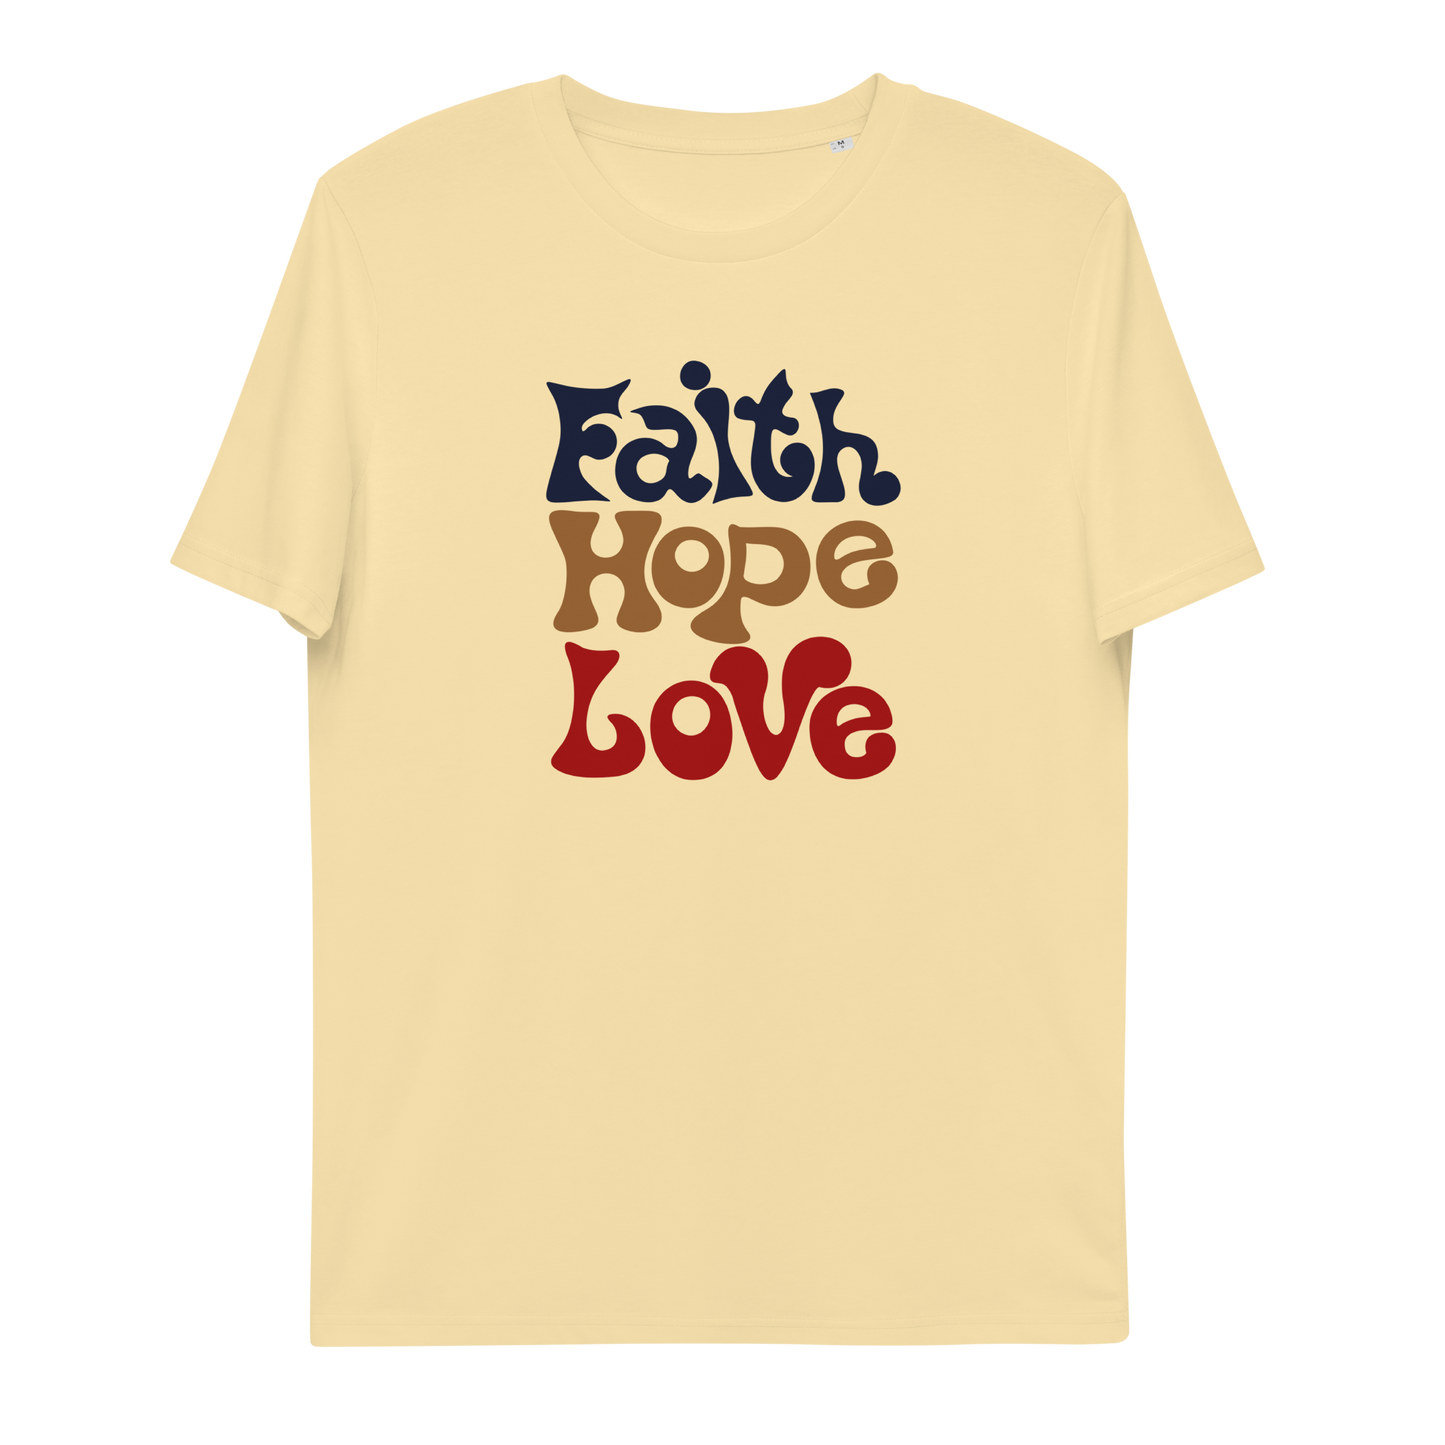 T-shirt chrétien imprimé - Faith (F)